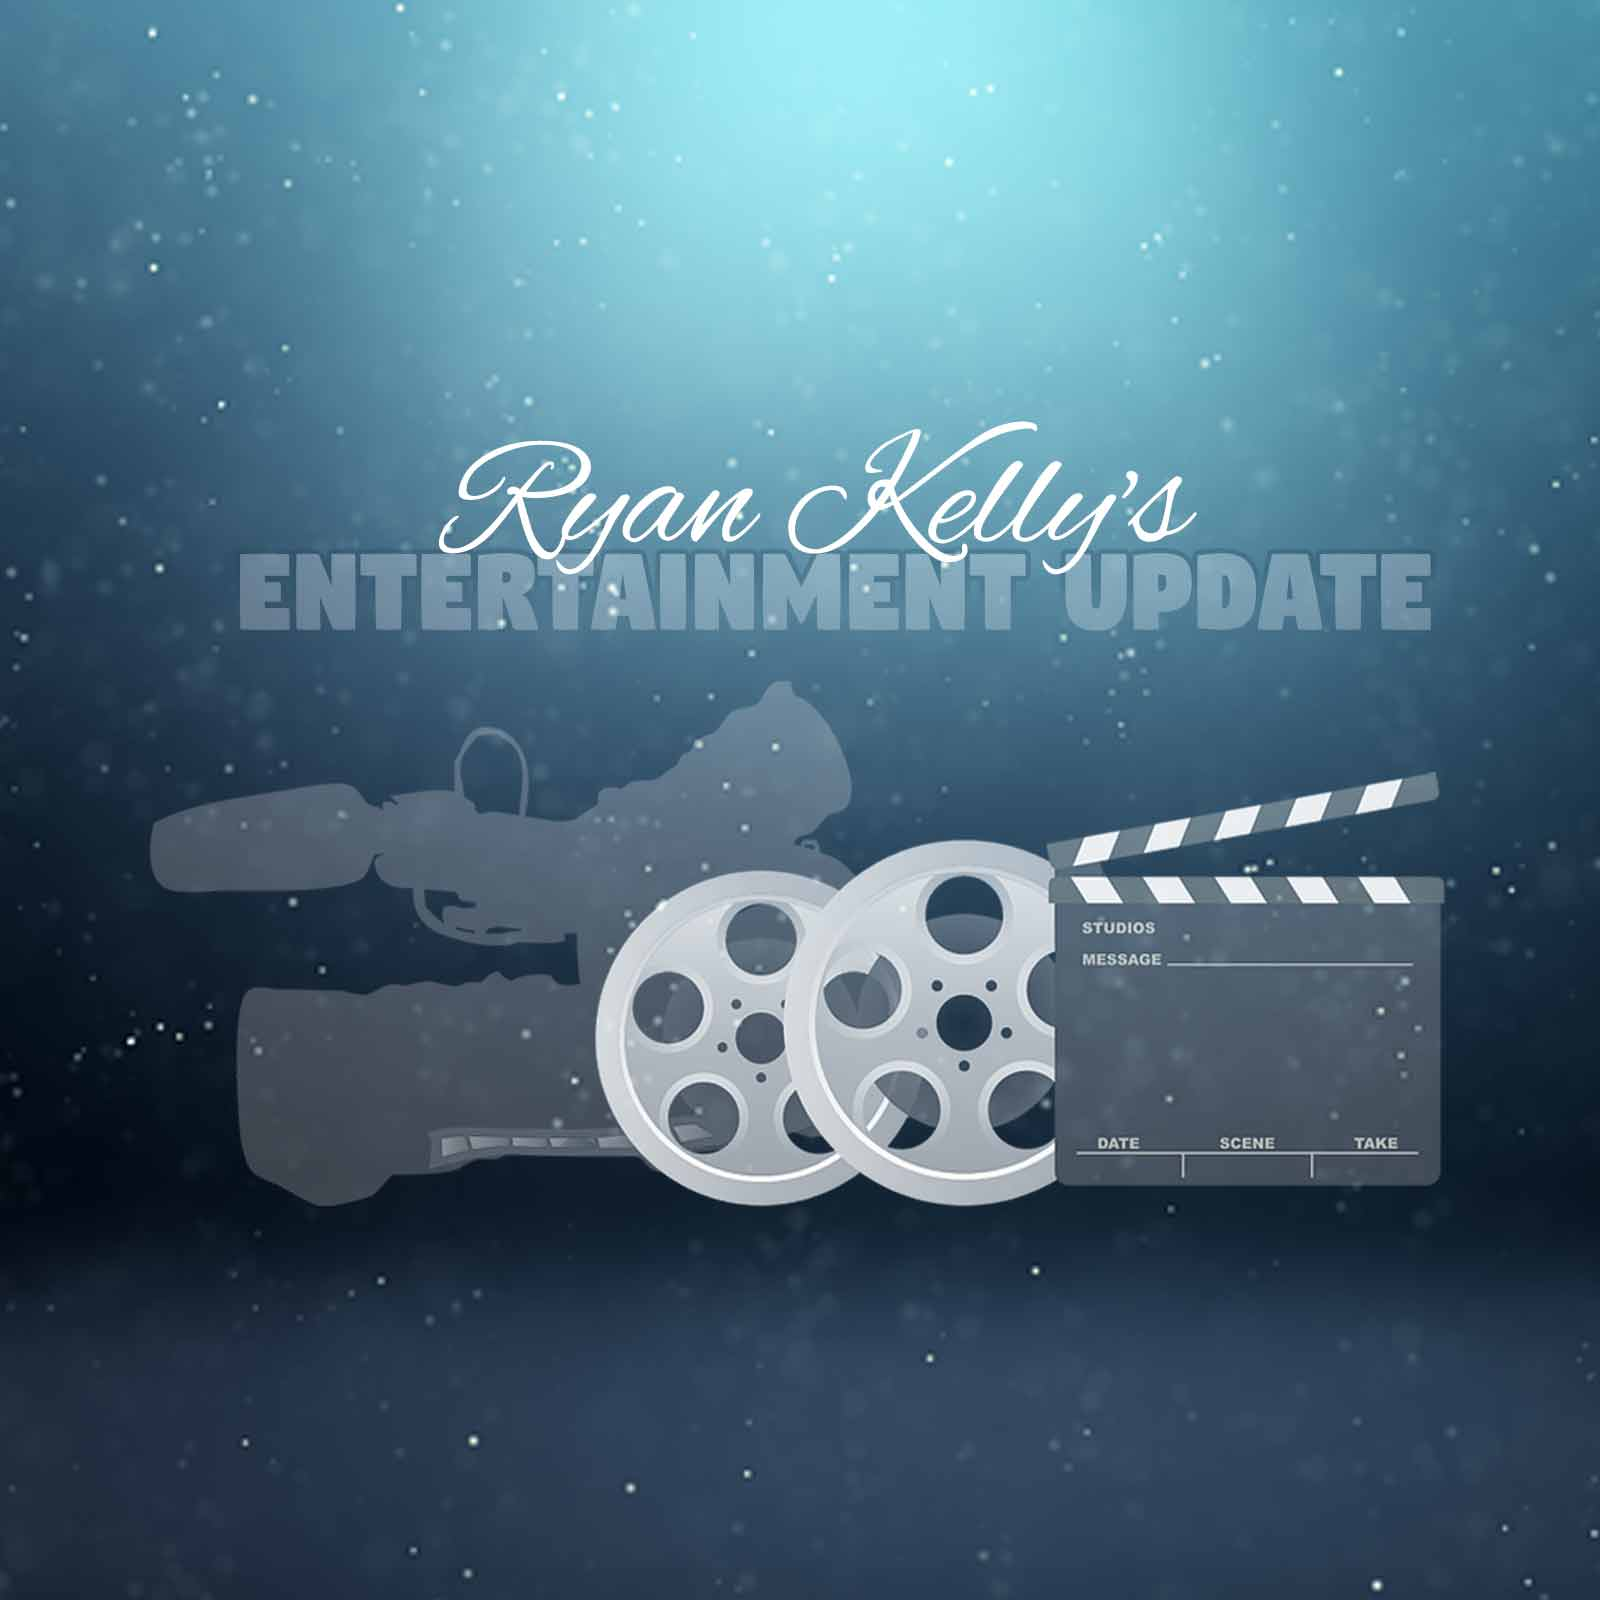 Ryan Kelly's Entertainment Update